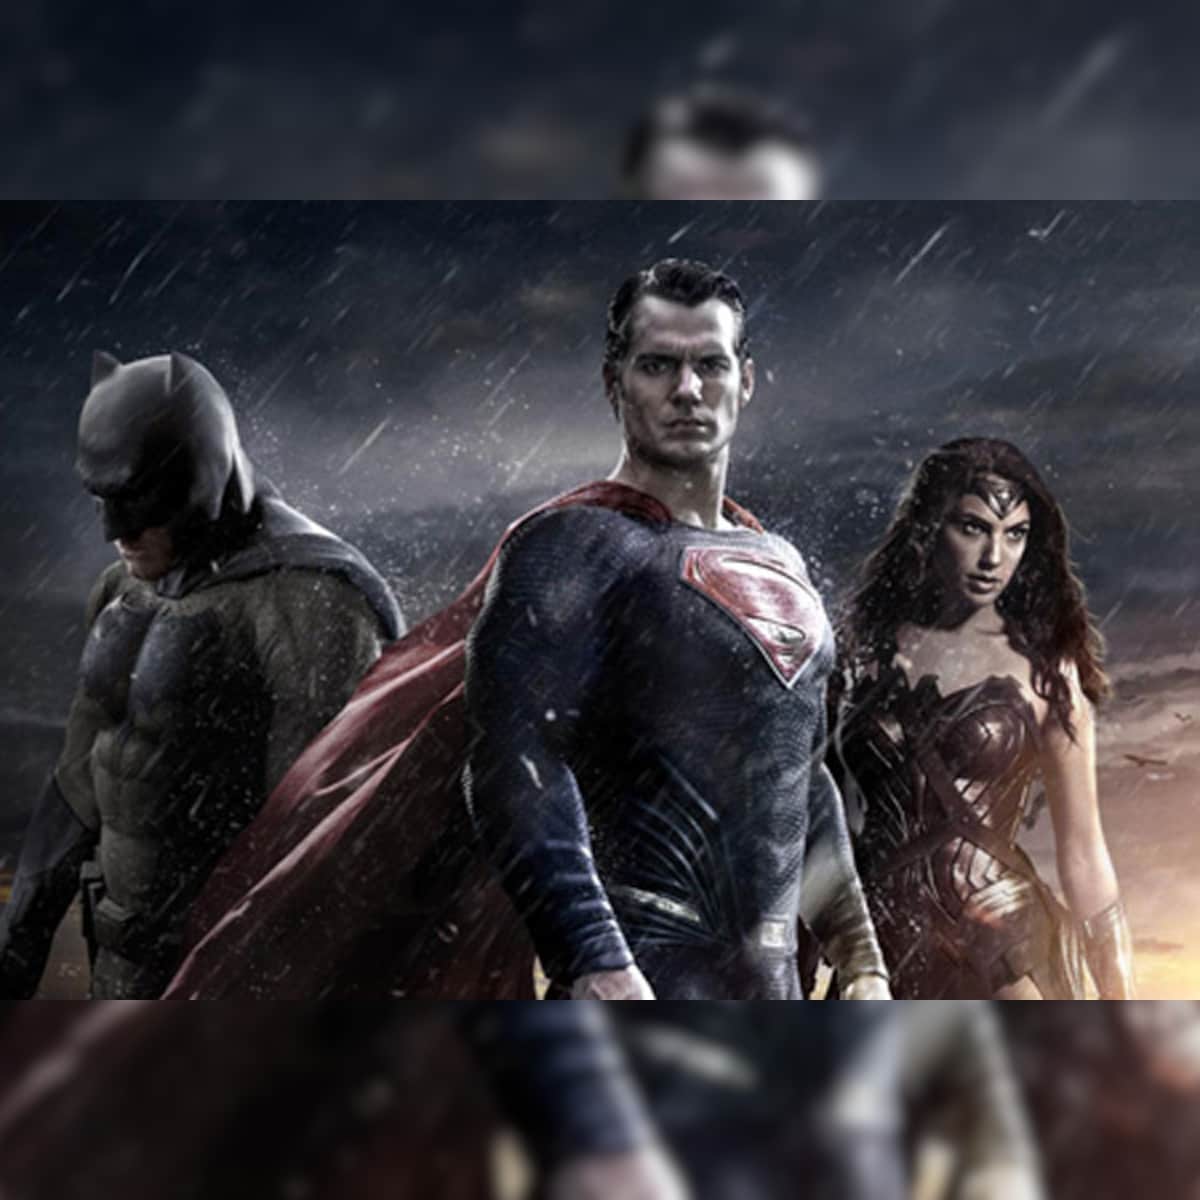 Is Flash a part of 'Batman v Superman: Dawn of Justice'?